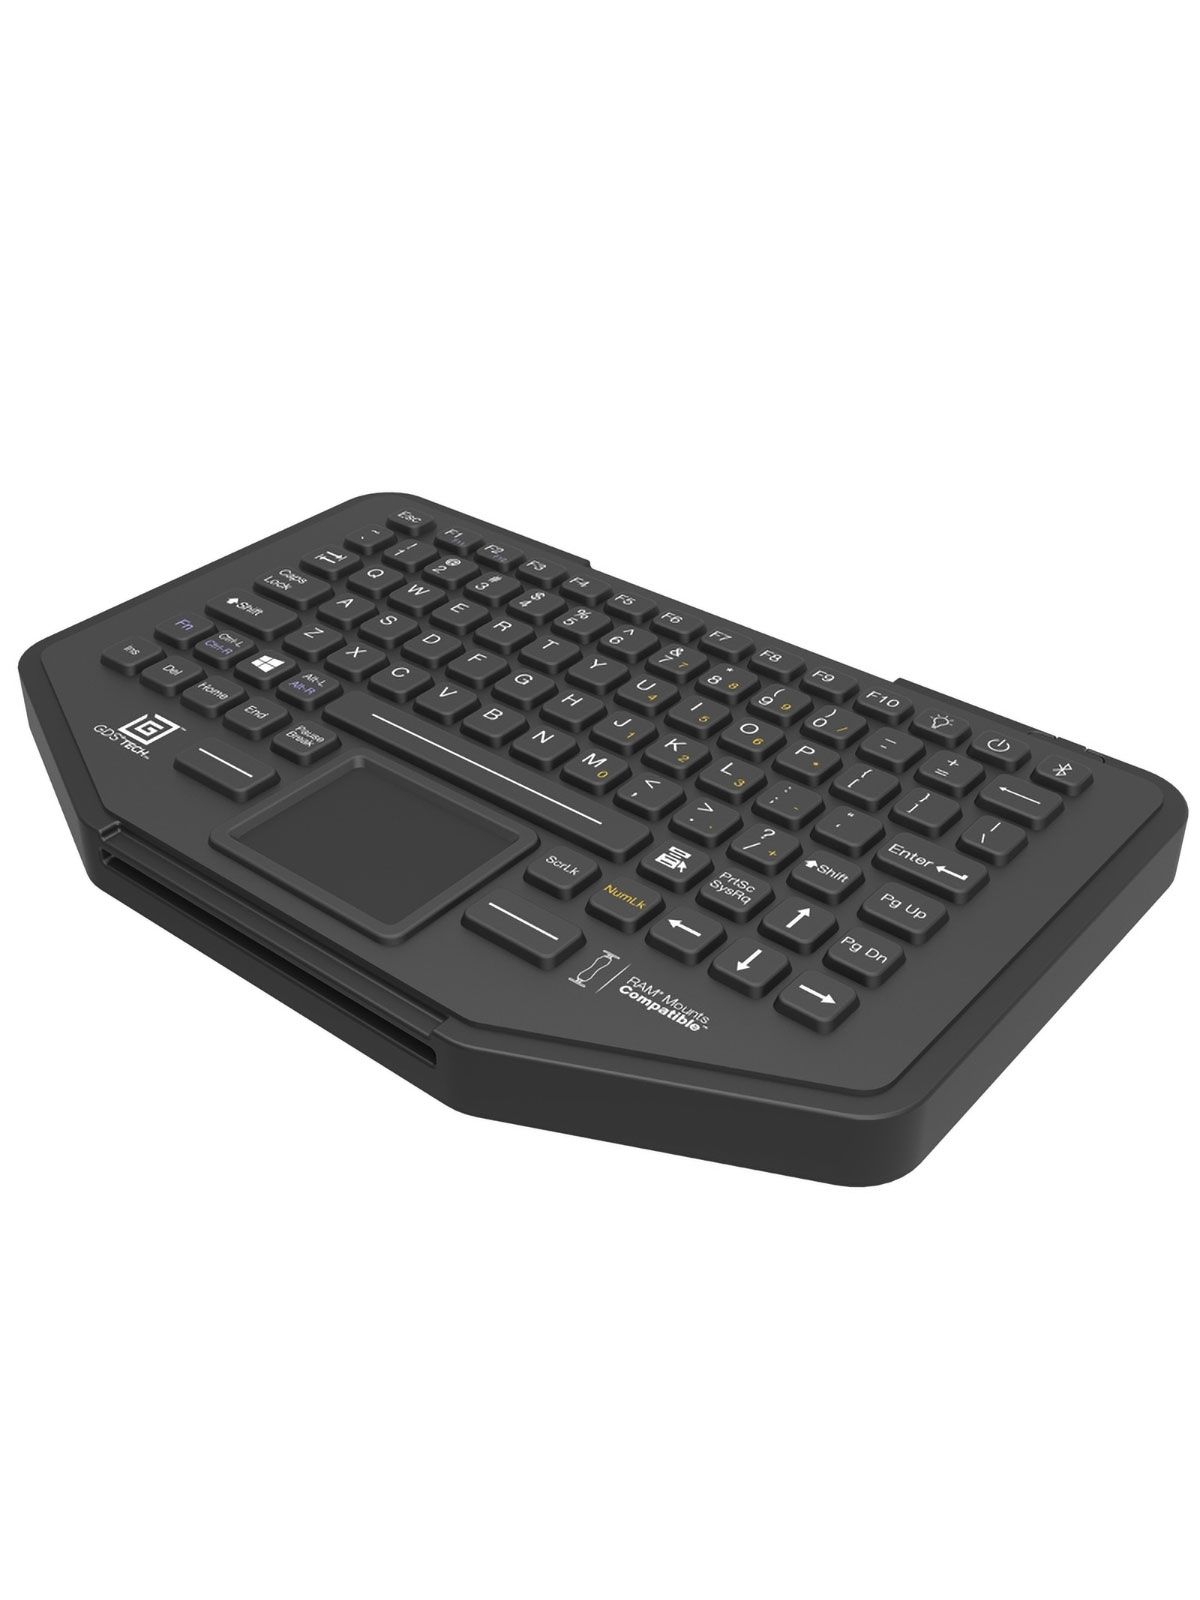 RAM Mounts GDS Tastatur - mit Mouse Track Pad, ca. 295 x 190 mm